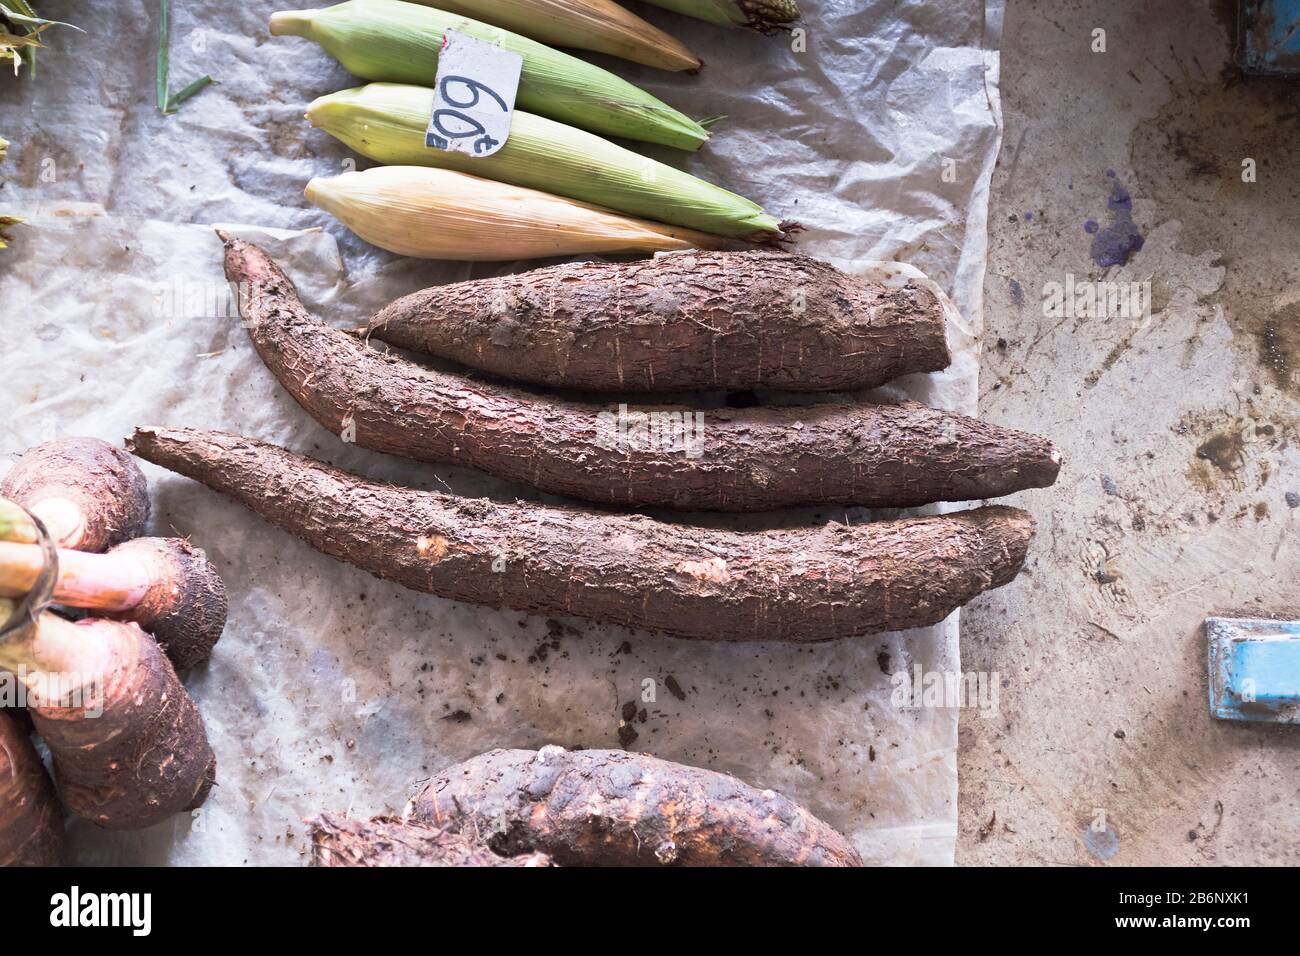 dh PNG-Markt AOTAU PAPUA-NEUGUINEA Tapioca-Wurzeln Gemüsepflanzen Märkte Produkte zeigen Gemüse Lebensmittel an Stockfoto